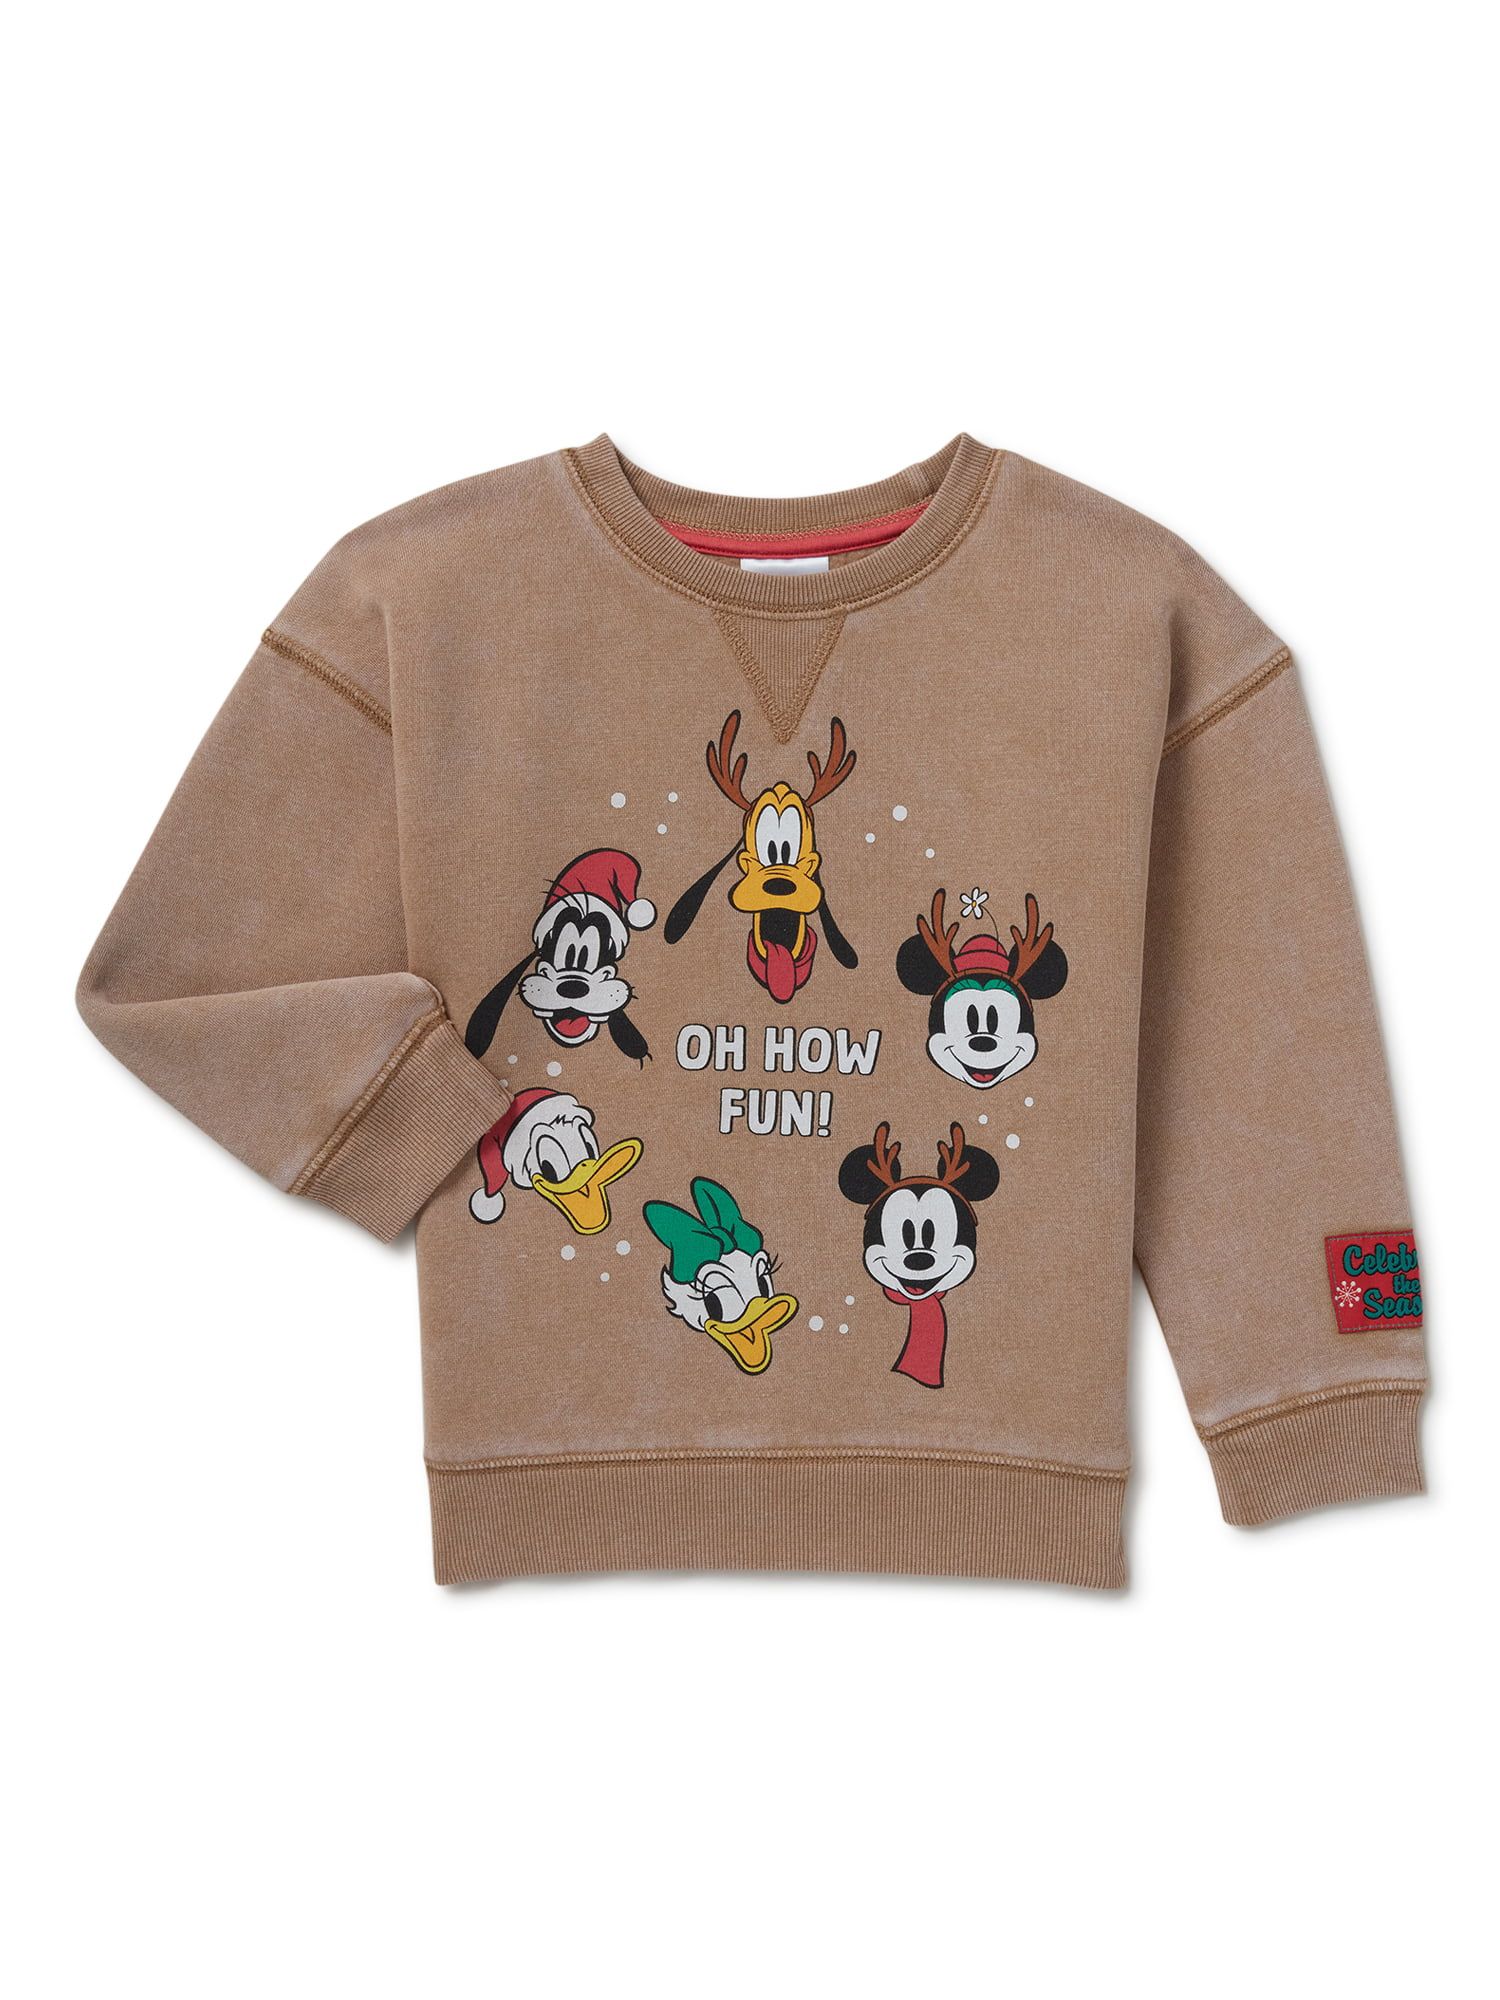 Mickey Mouse Baby and Toddler Boys Festive Crewneck Sweatshirt, Sizes 12M-5T | Walmart (US)